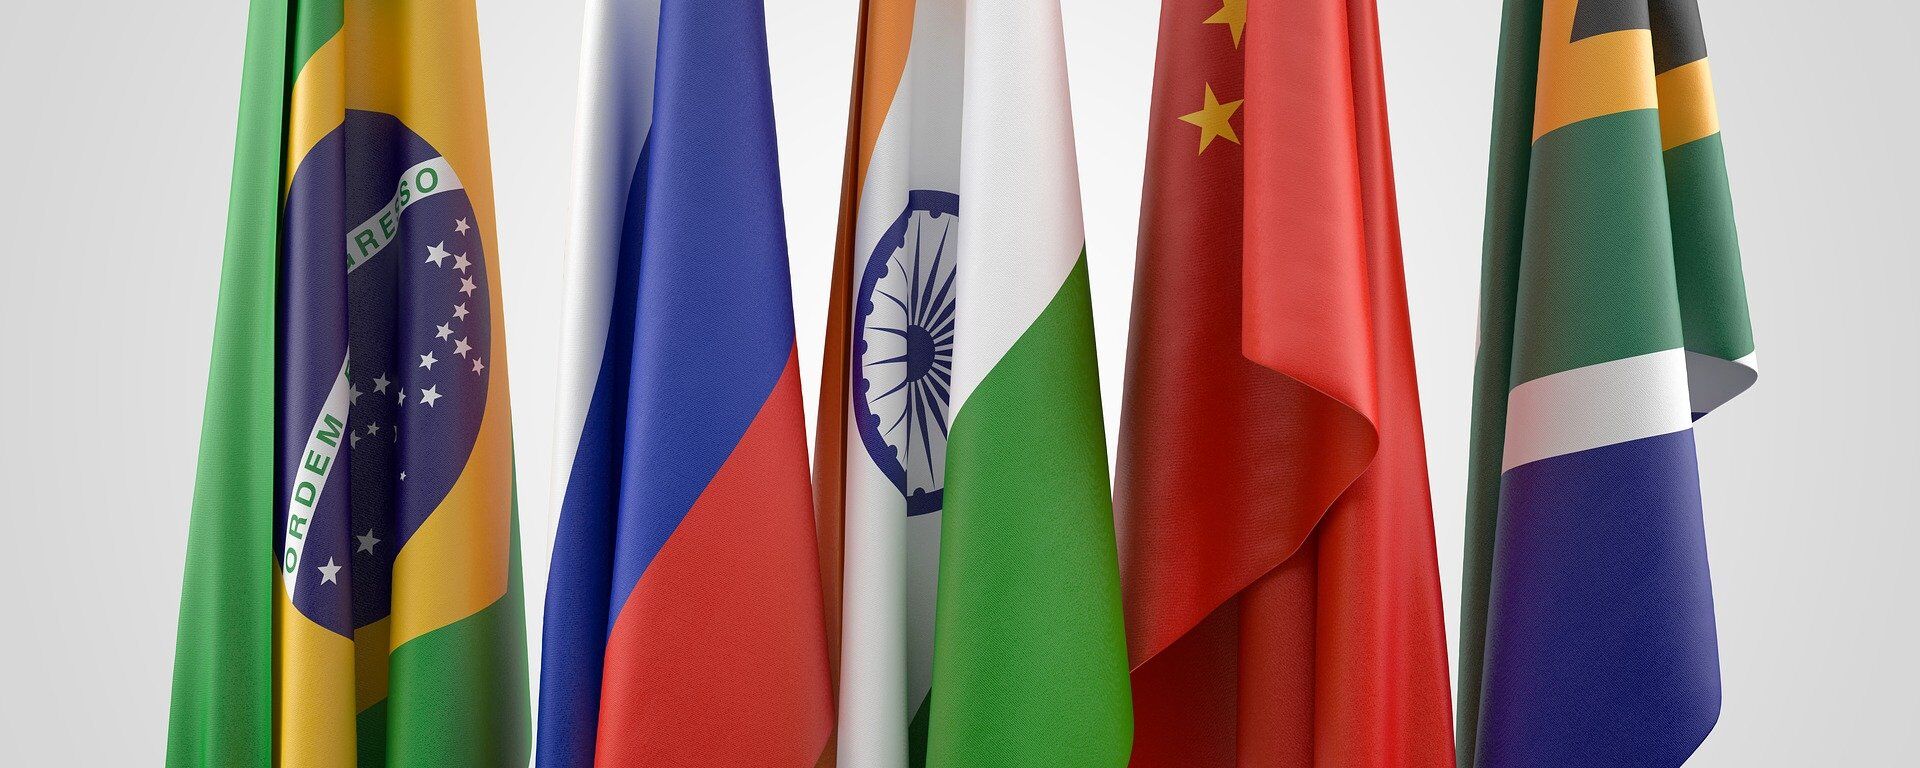 Banderas de los países BRICS: Brasil, Rusia, India, China y Sudáfrica - Sputnik Mundo, 1920, 15.06.2022